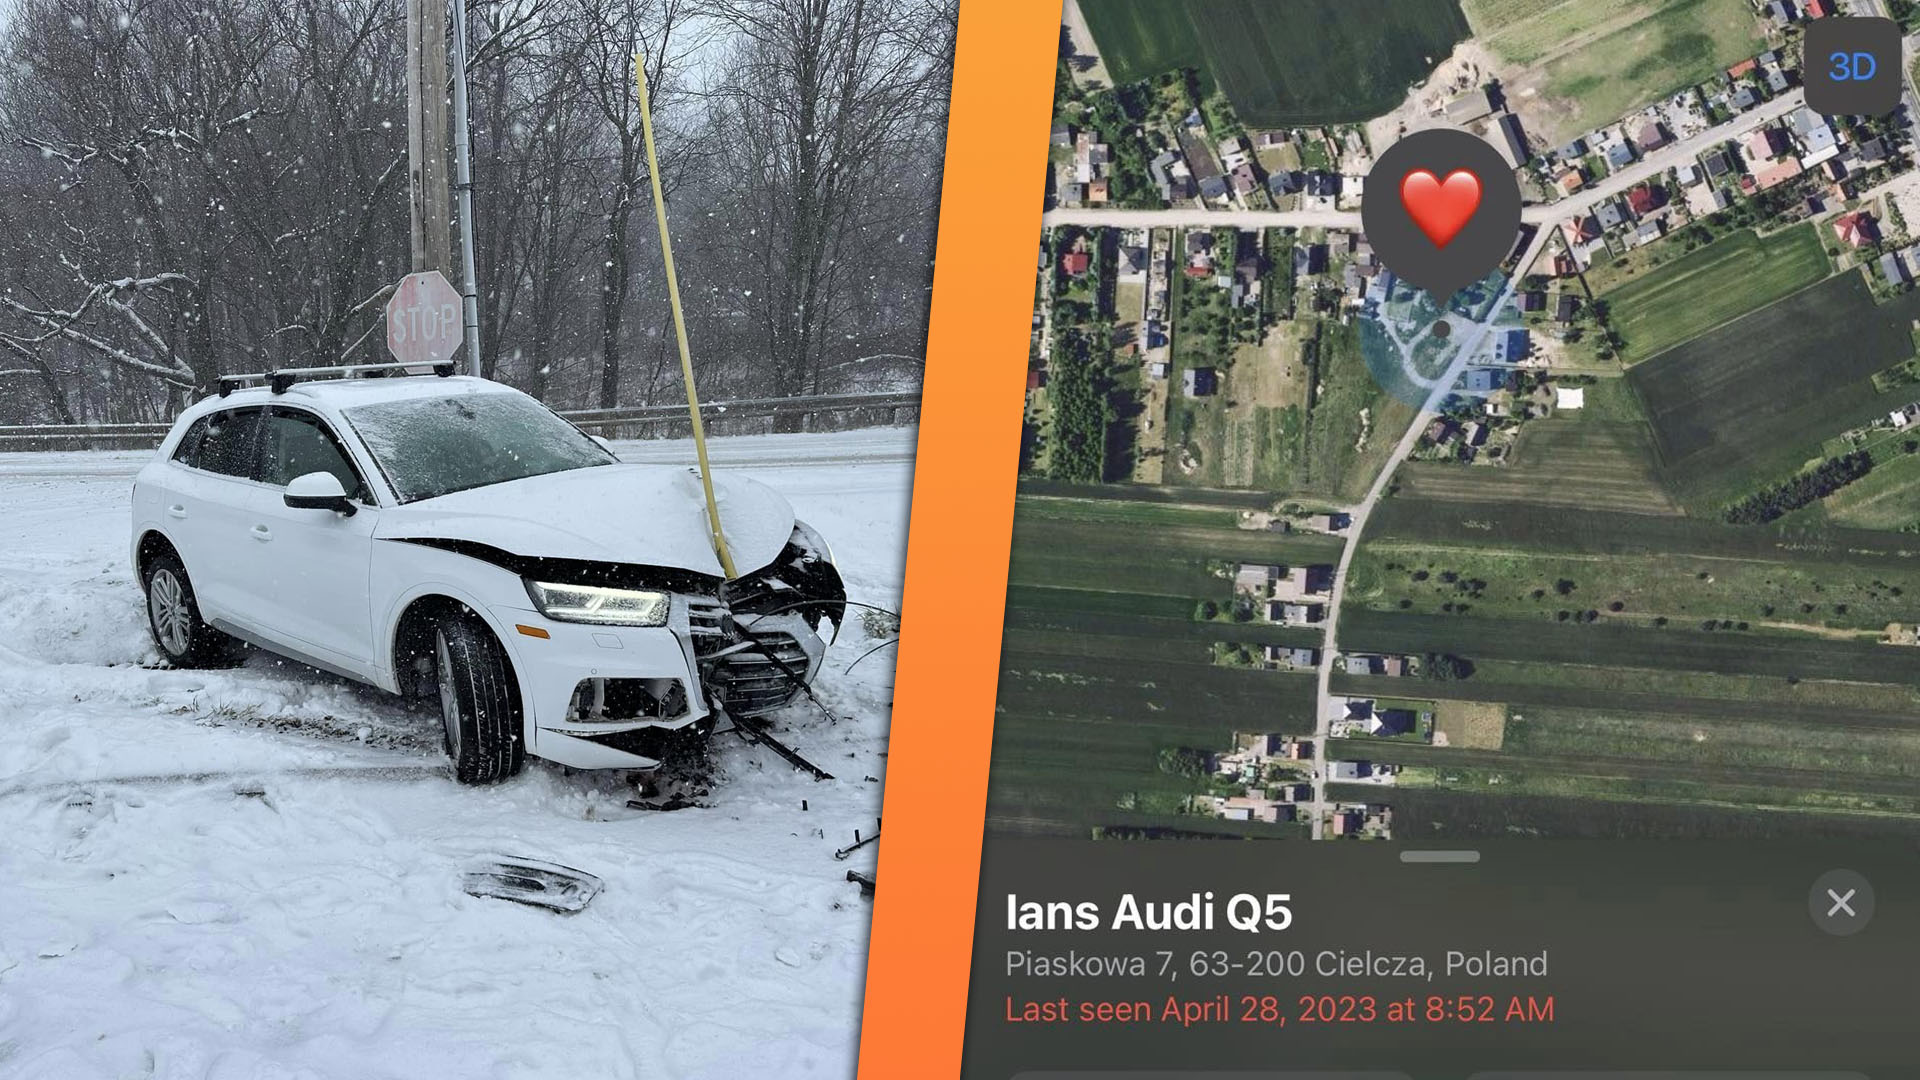 Forgotten Airtag Tracks Totaled Audi Q5 From Pennsylvania to Poland